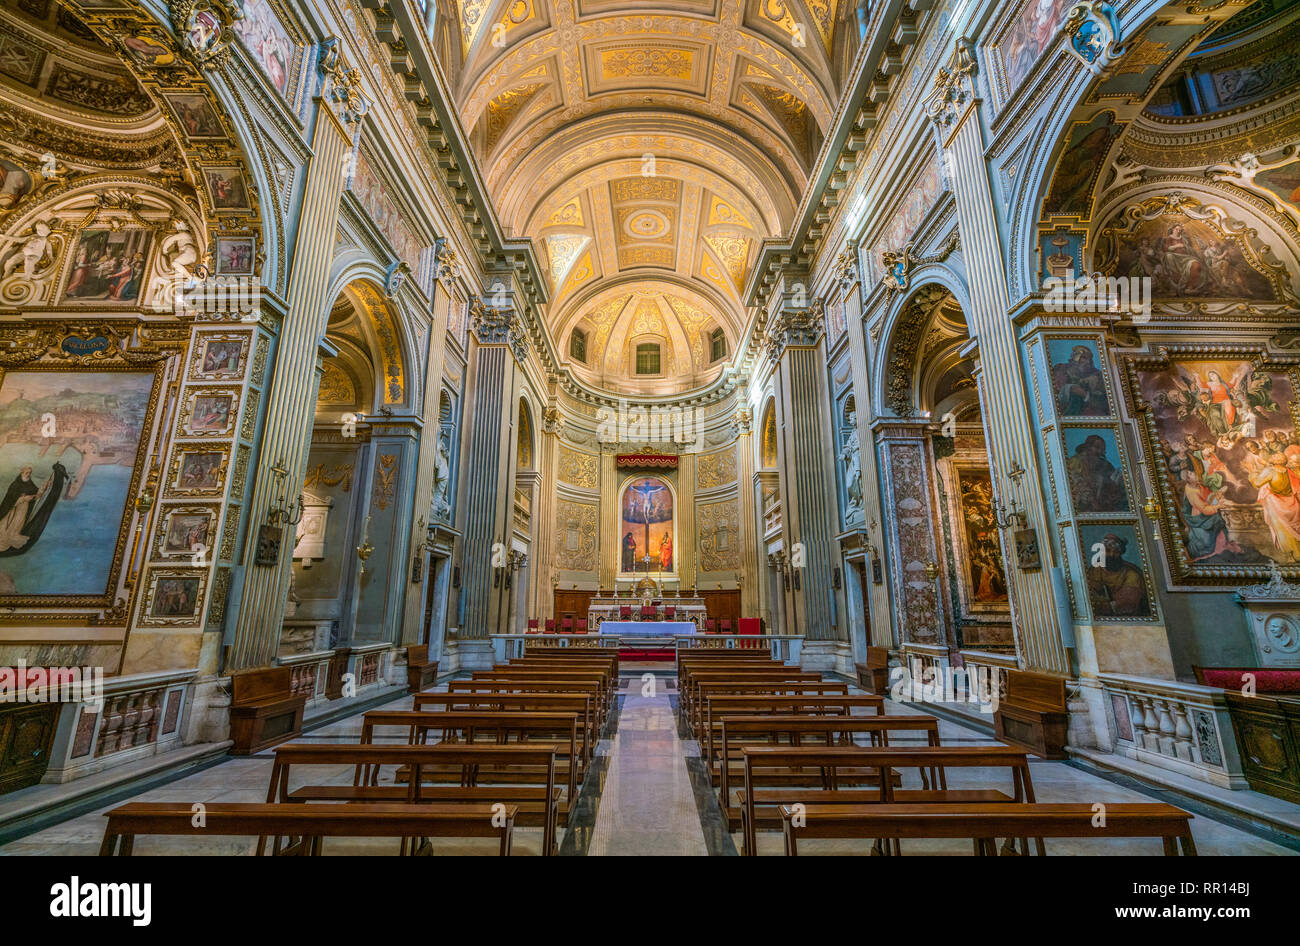 Interior sight from Church of Santa Maria in Monserrato degli Spagnoli, Rome, Italy. Stock Photo